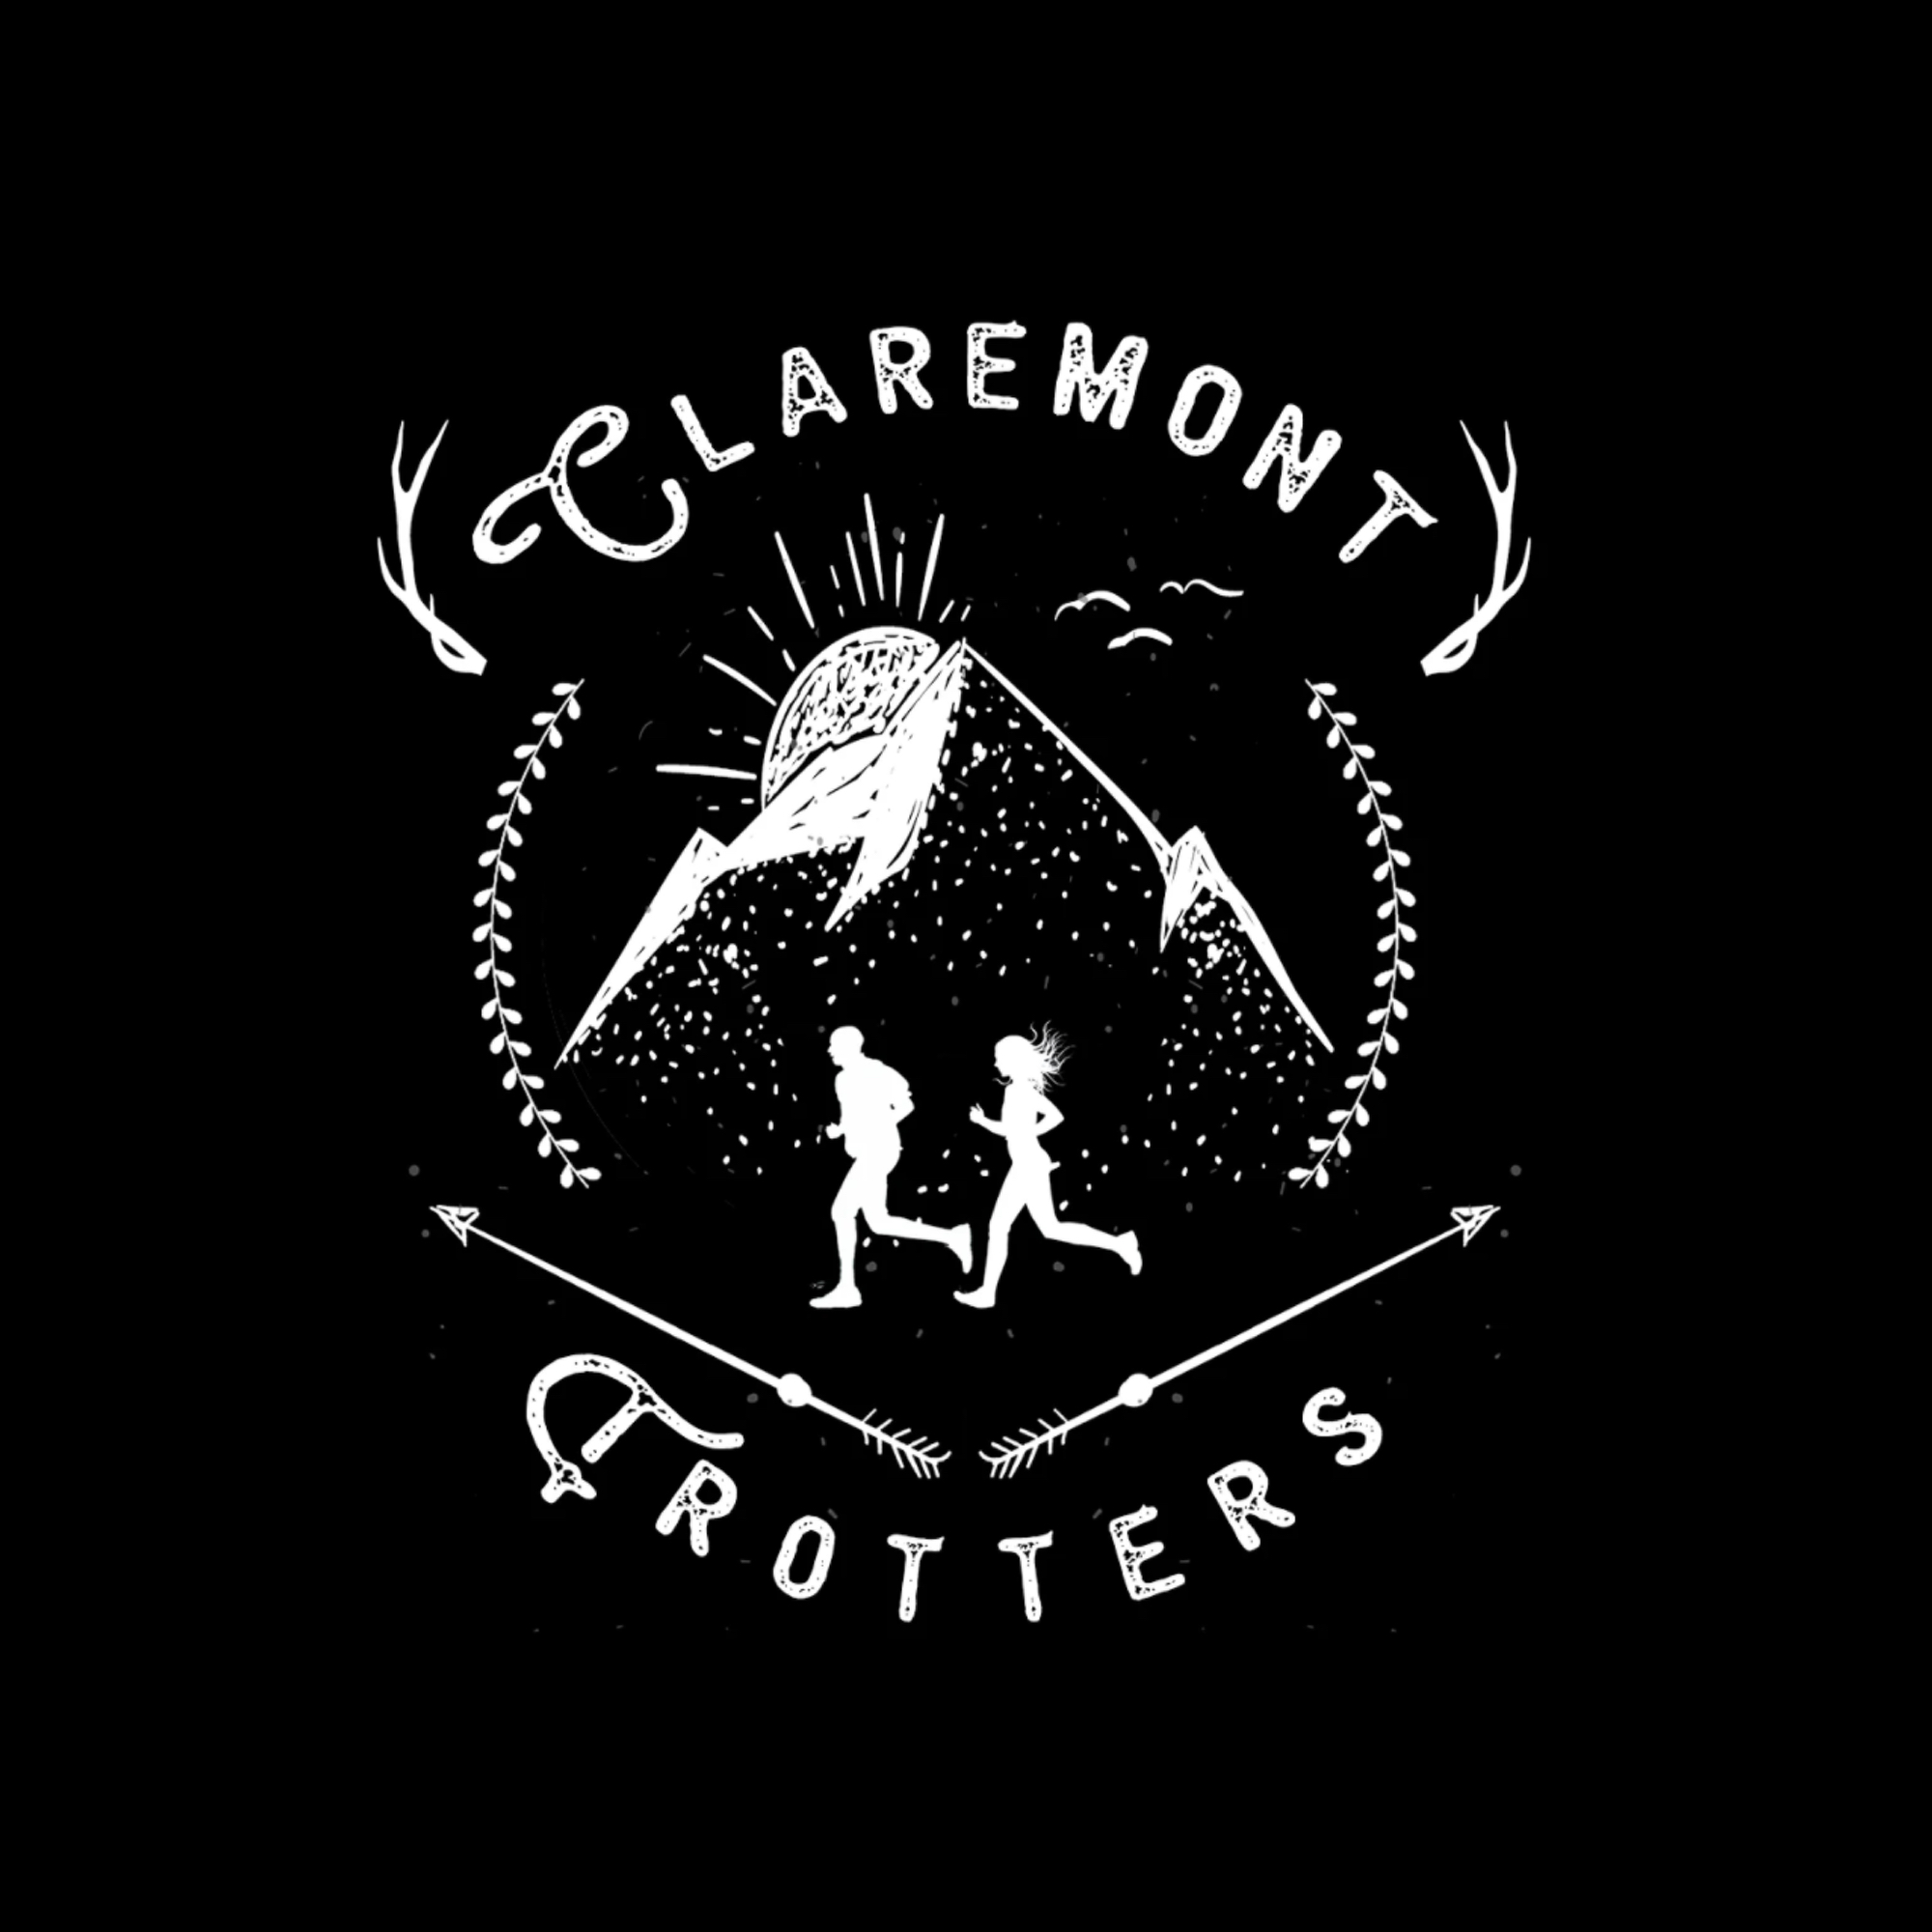 Claremont Trotters